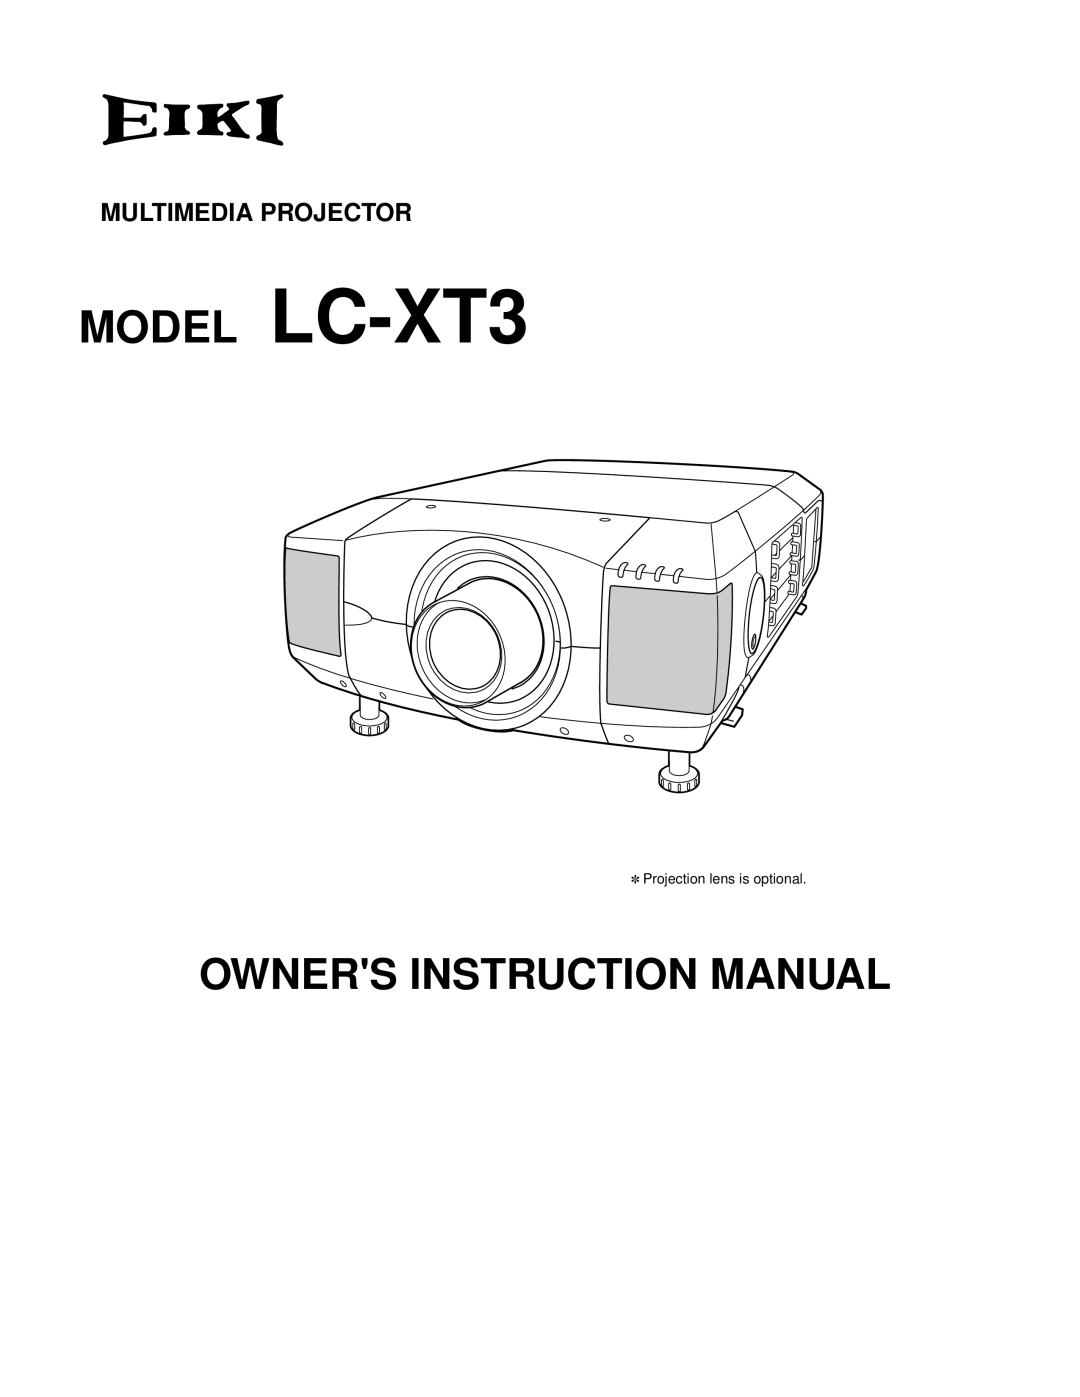 Eiki instruction manual Model LC-XT3, Multimedia Projector 